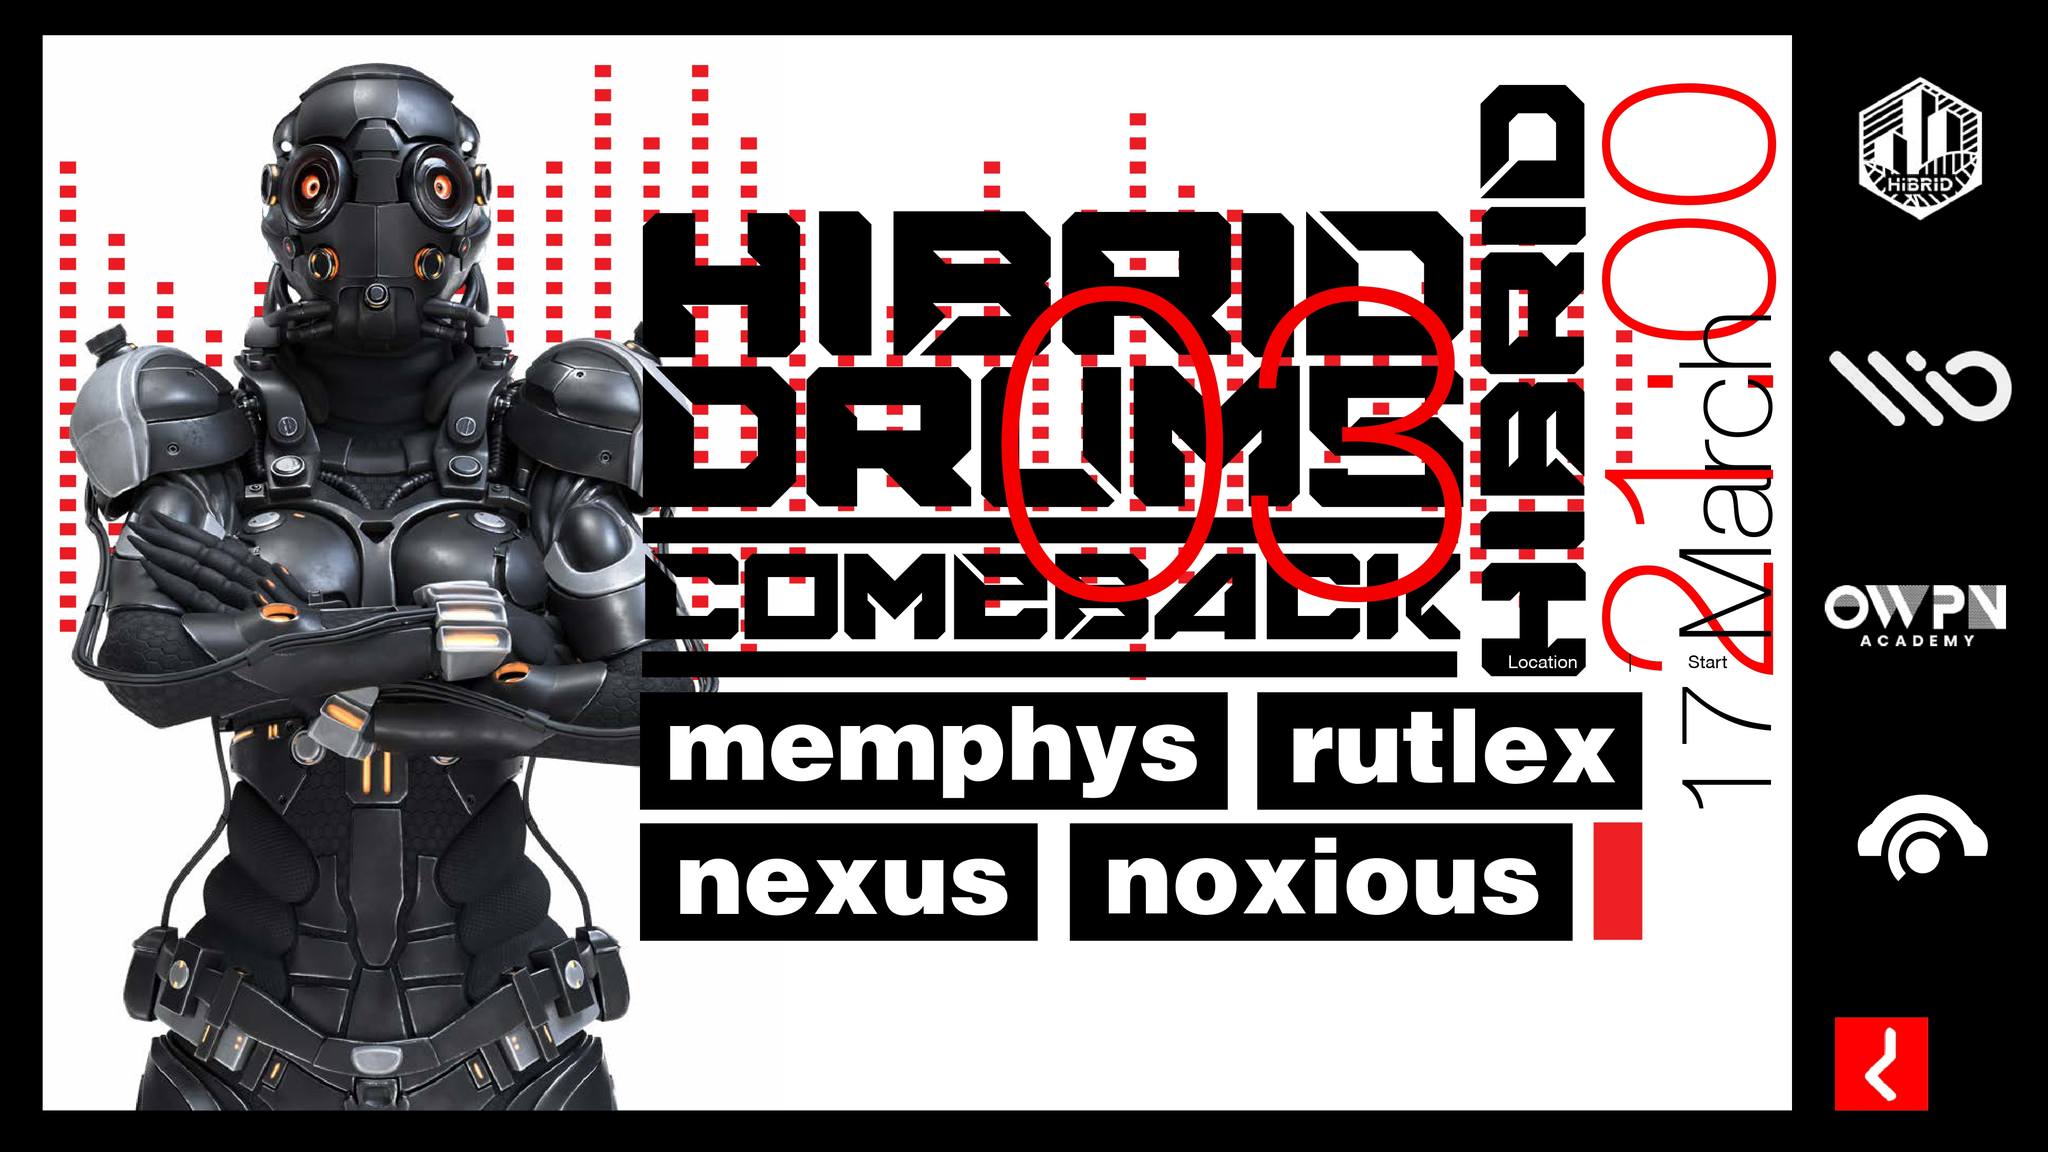 HiBRID DRUMS 03 COMEBACK